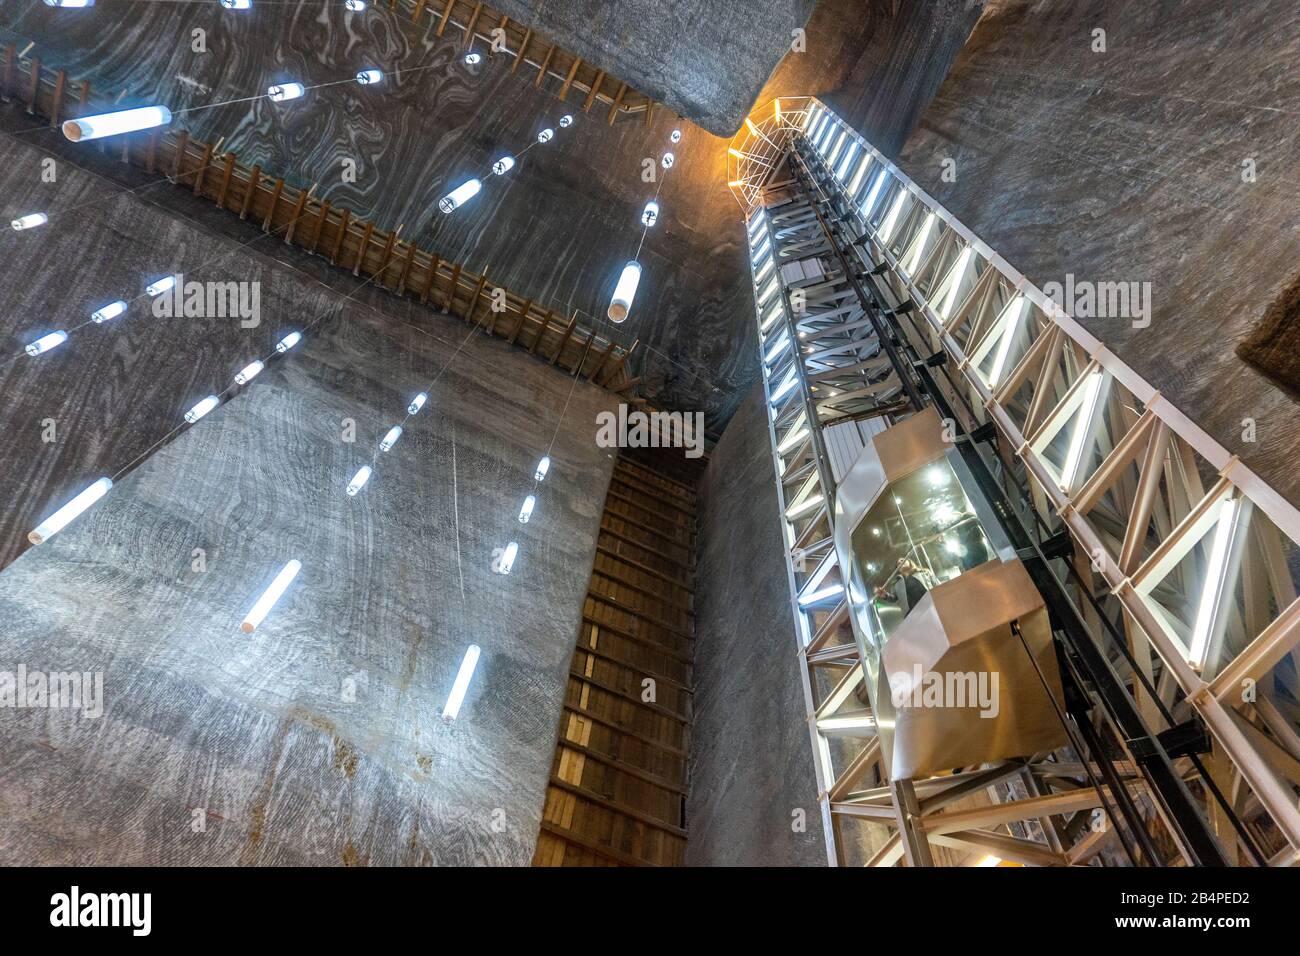 SALINA TURDA, ROMANIA - DEC 22, 2019: Rudolf mine panoramic elevator that offers tourists an overview of the whole mine in Romania. Salina Turda illus Stock Photo